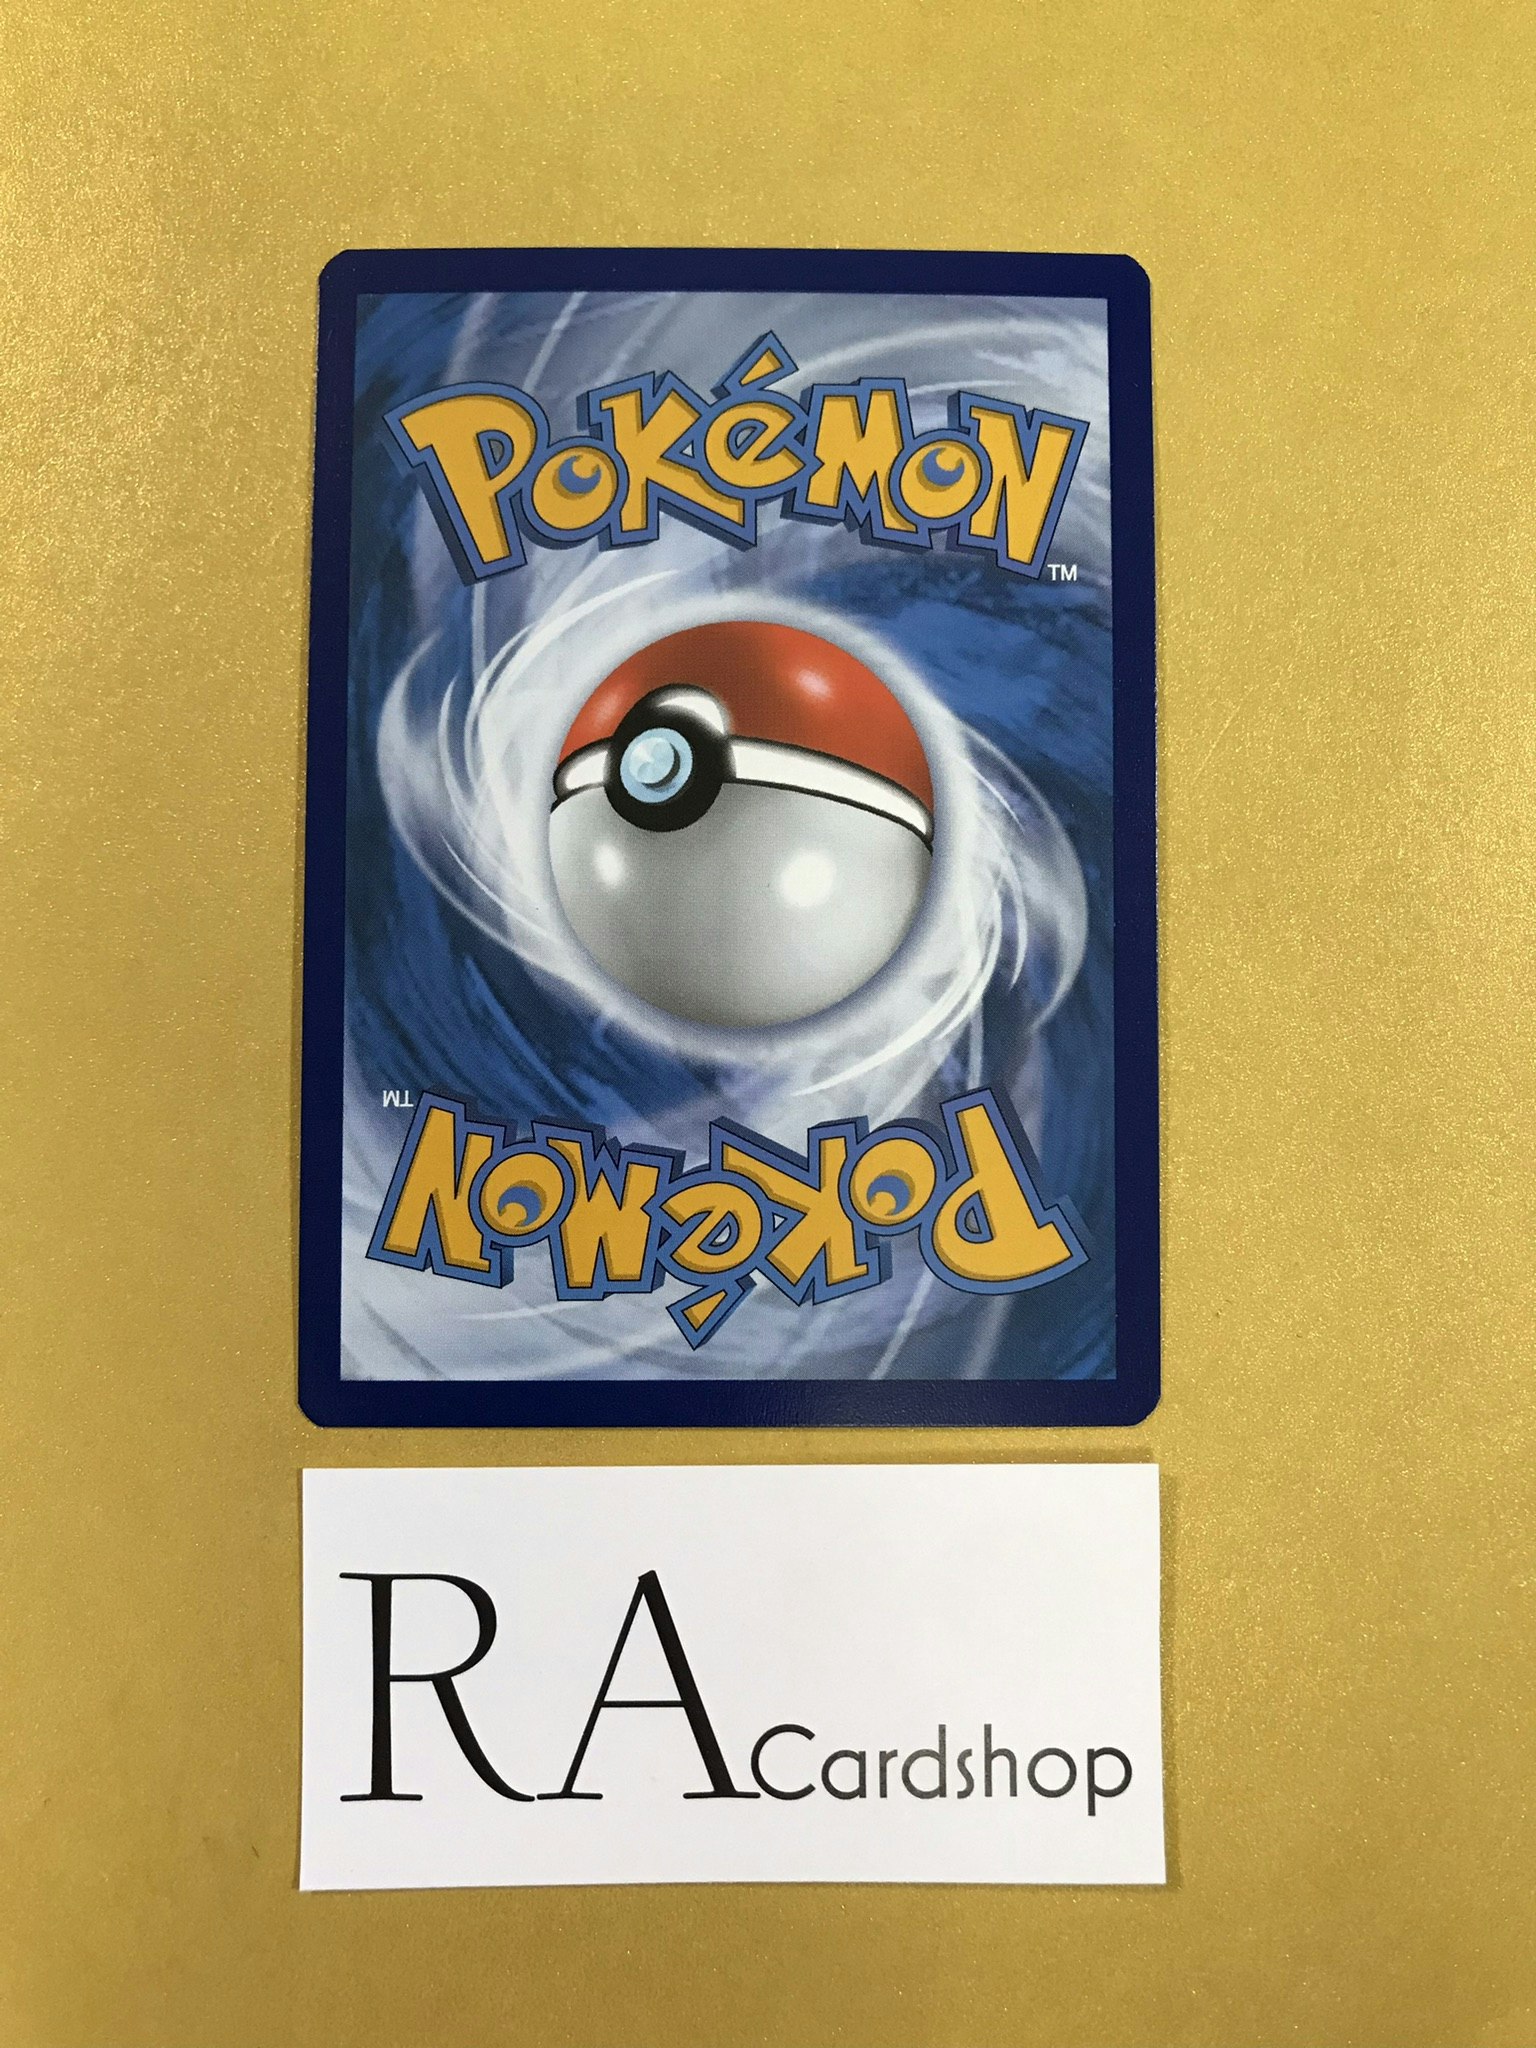 Oricorio Rare 042/264 Fusion Strike Pokemon